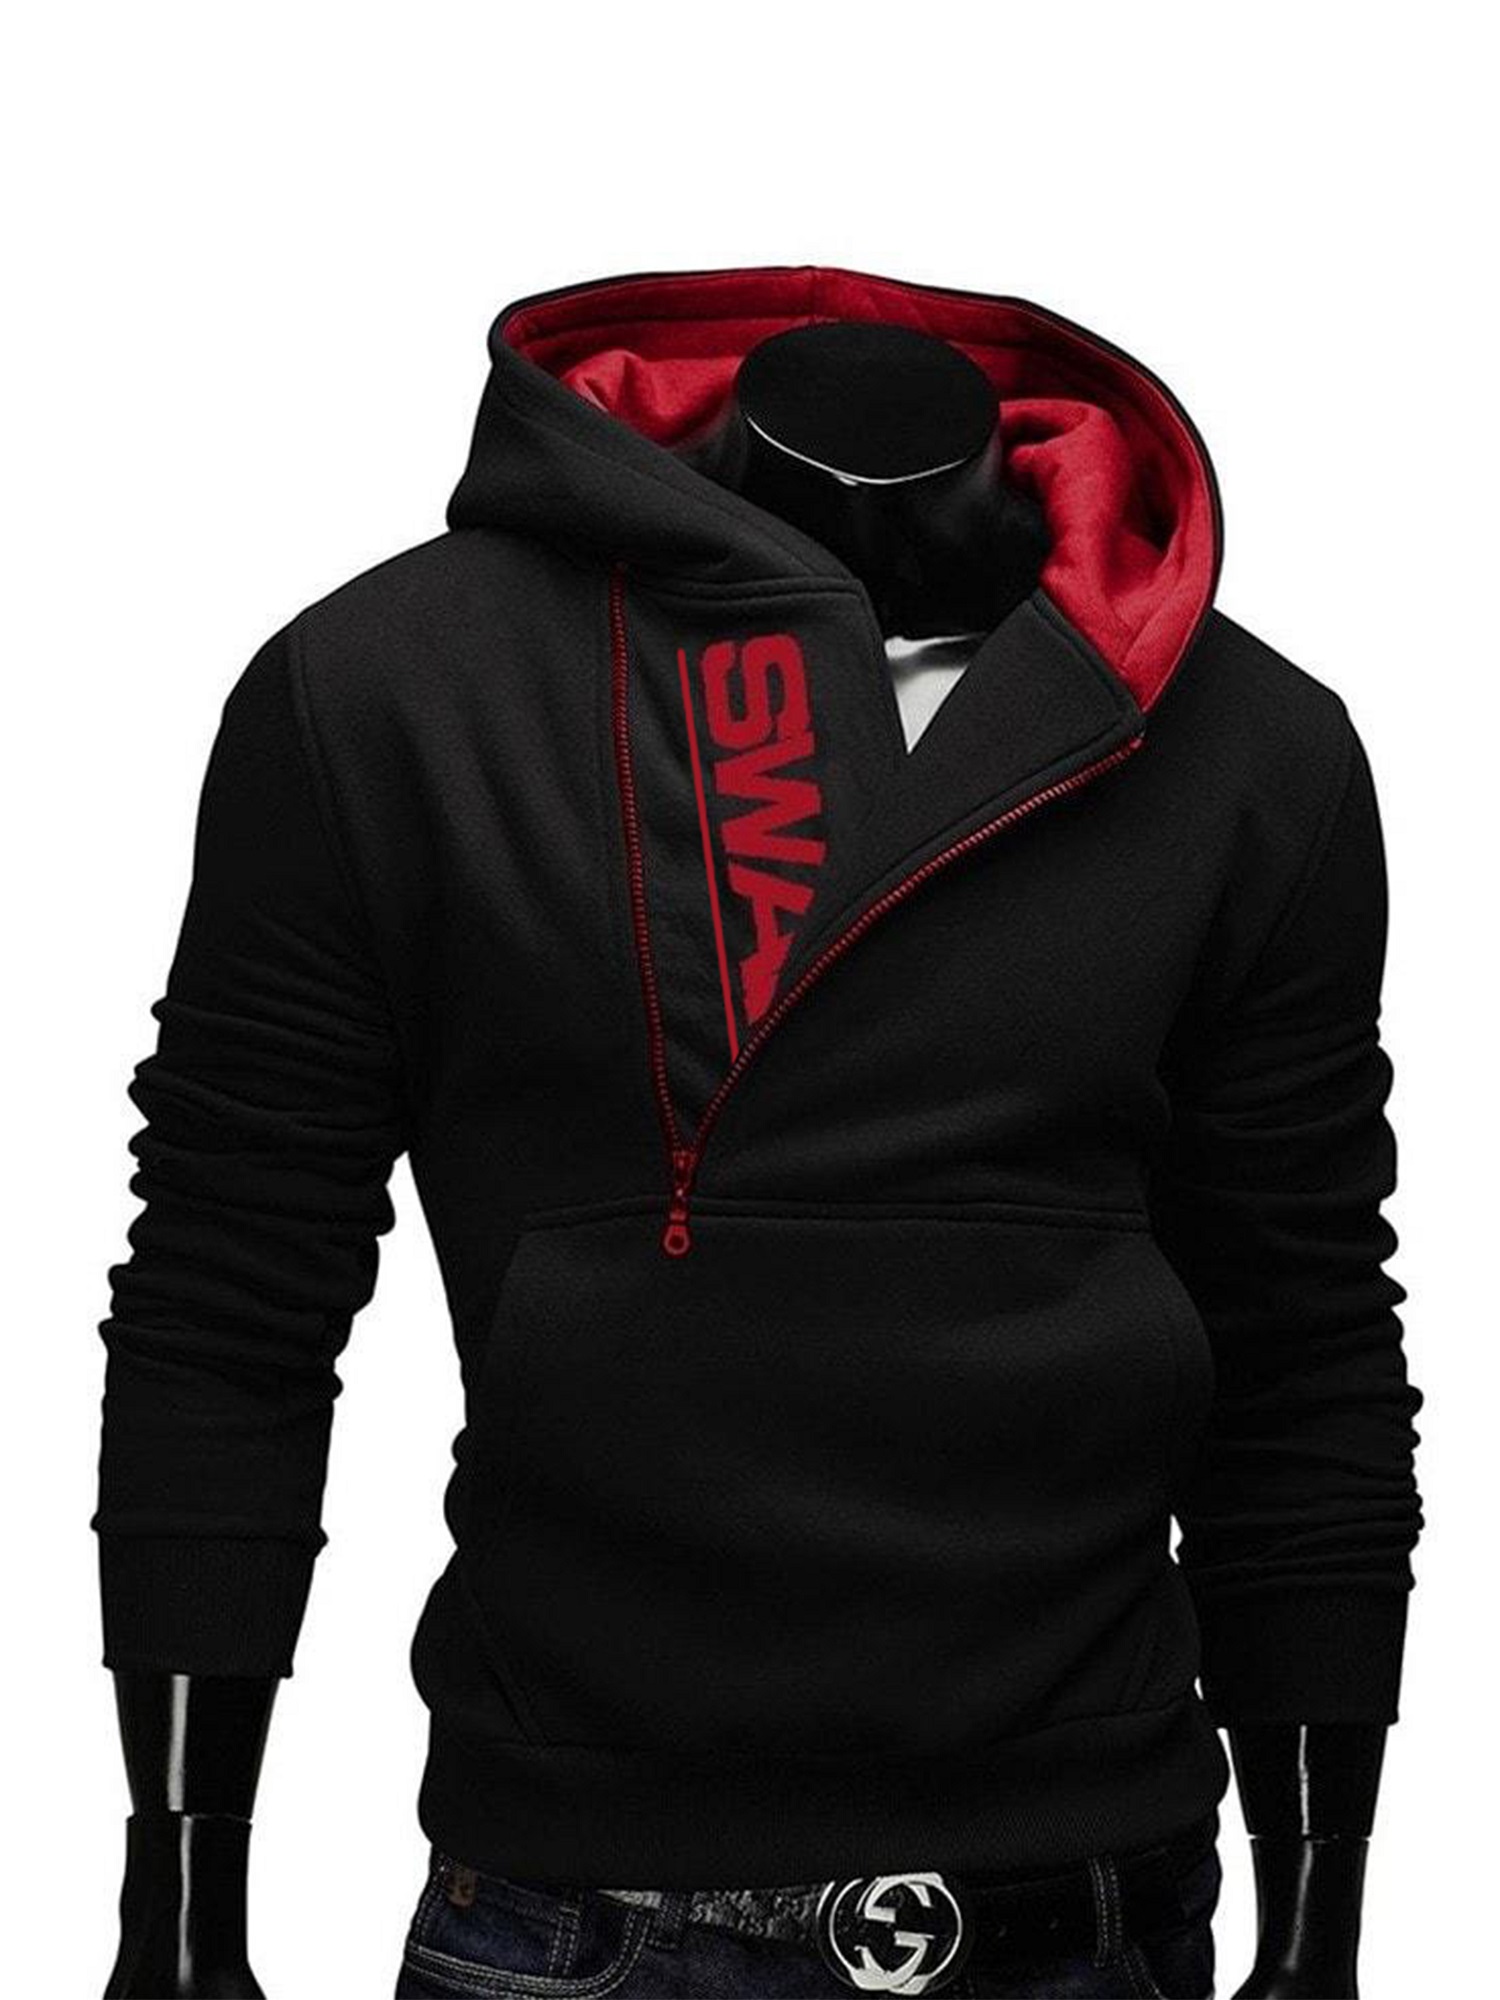 Buy Hooded army fit sweatshirt for men Online - Get 50% Off